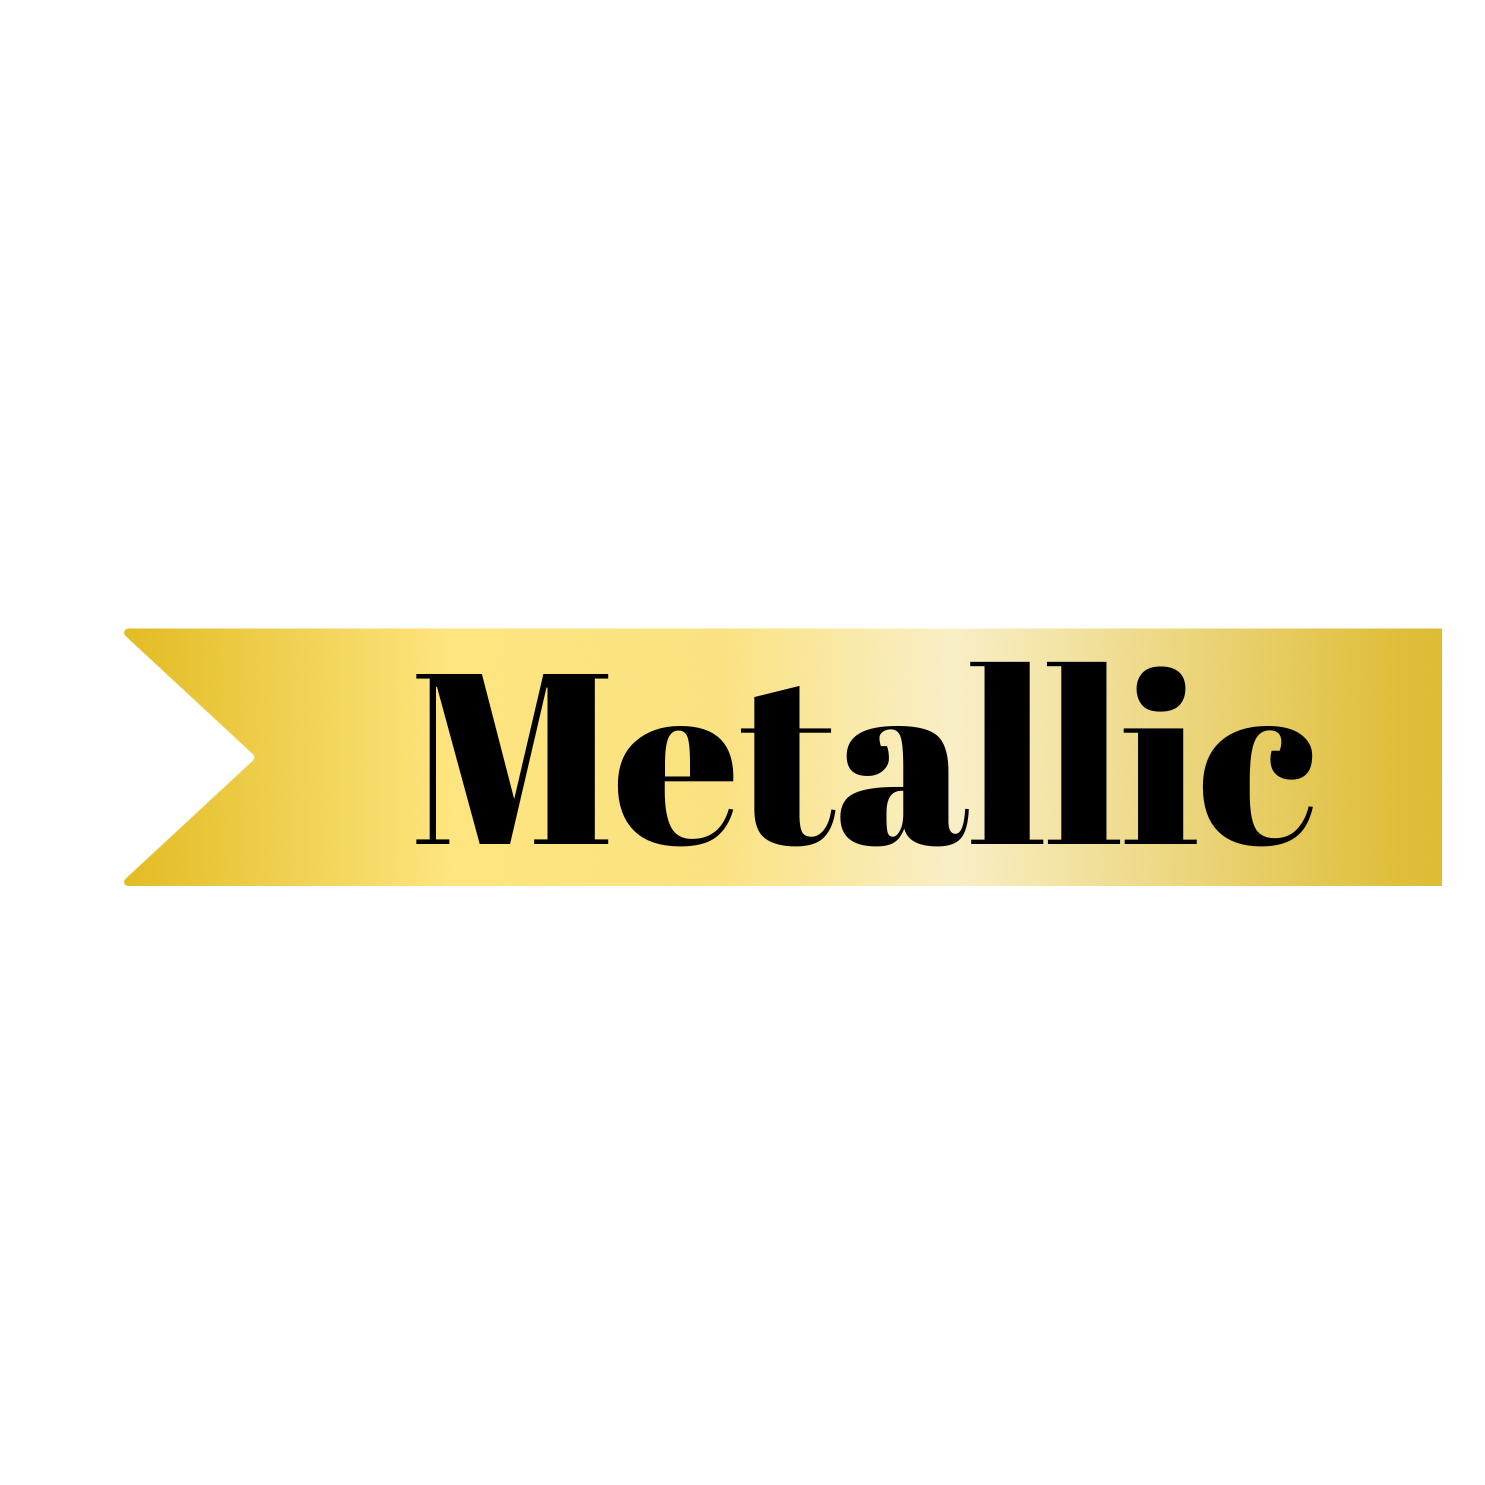 metalic